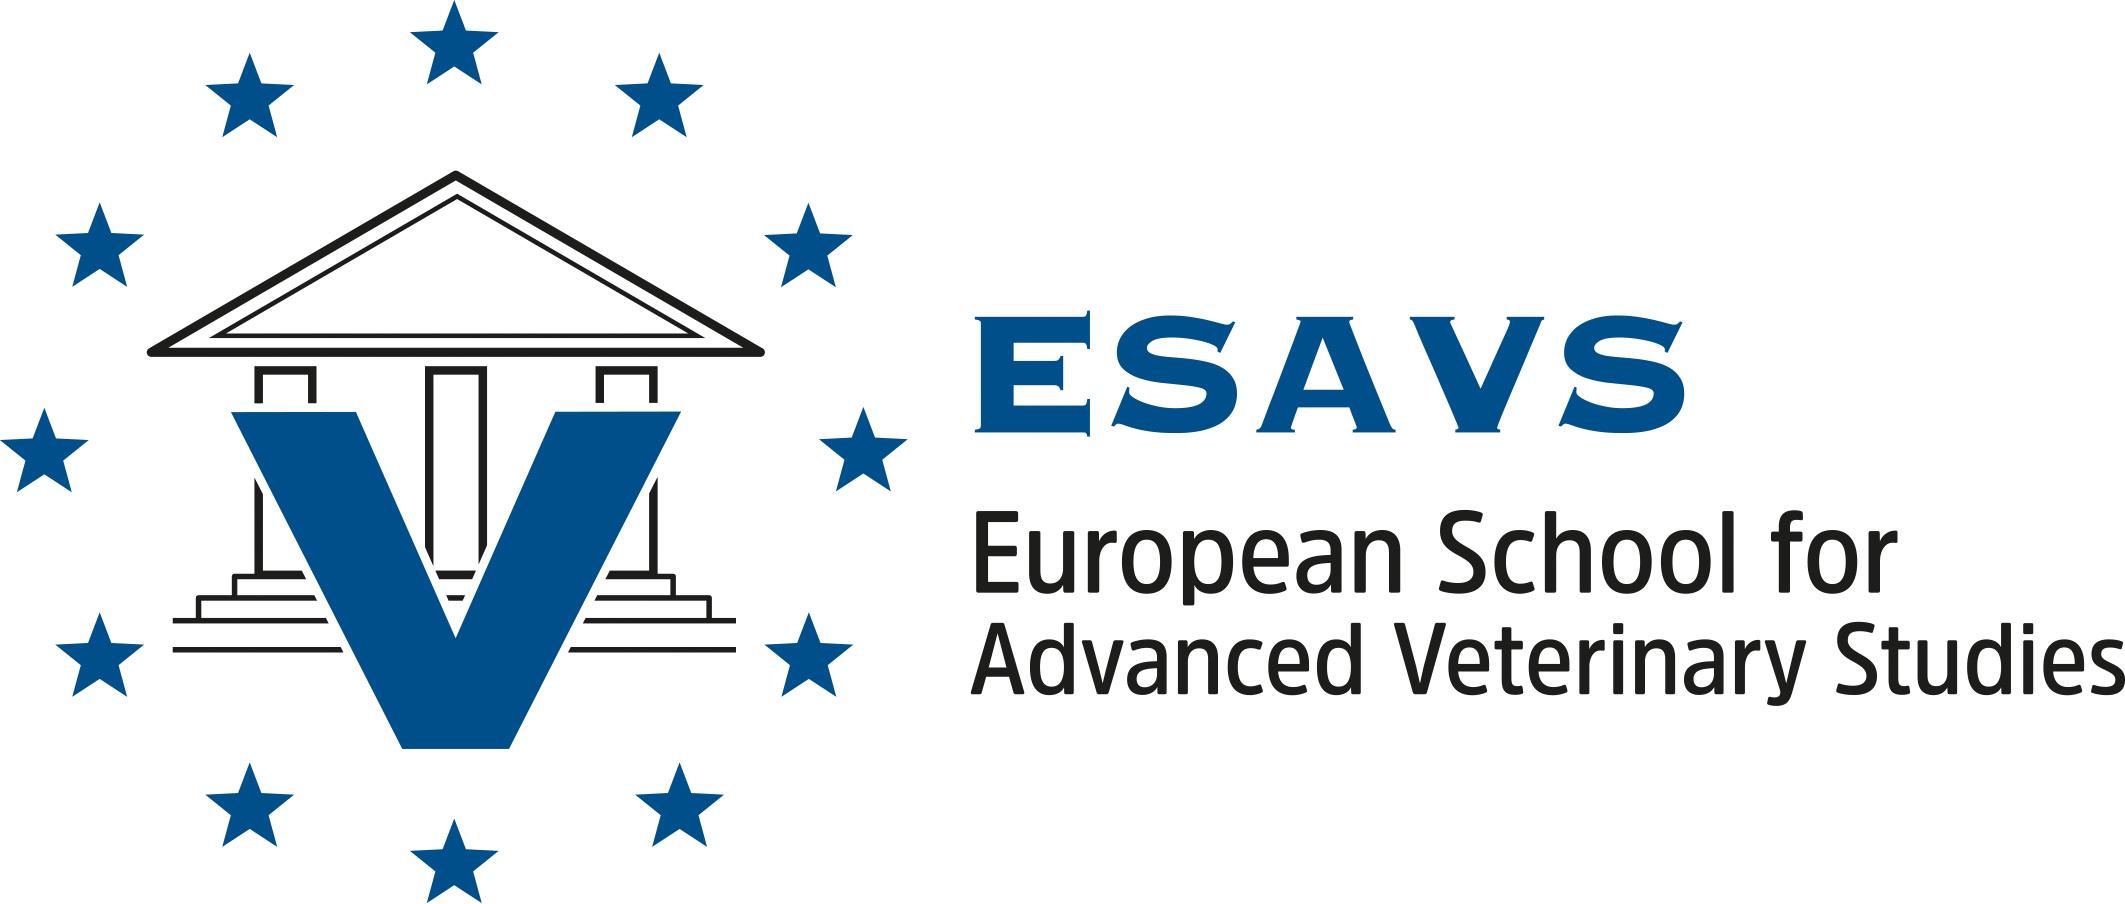 European School for Advanced Veterinary Studies Logo